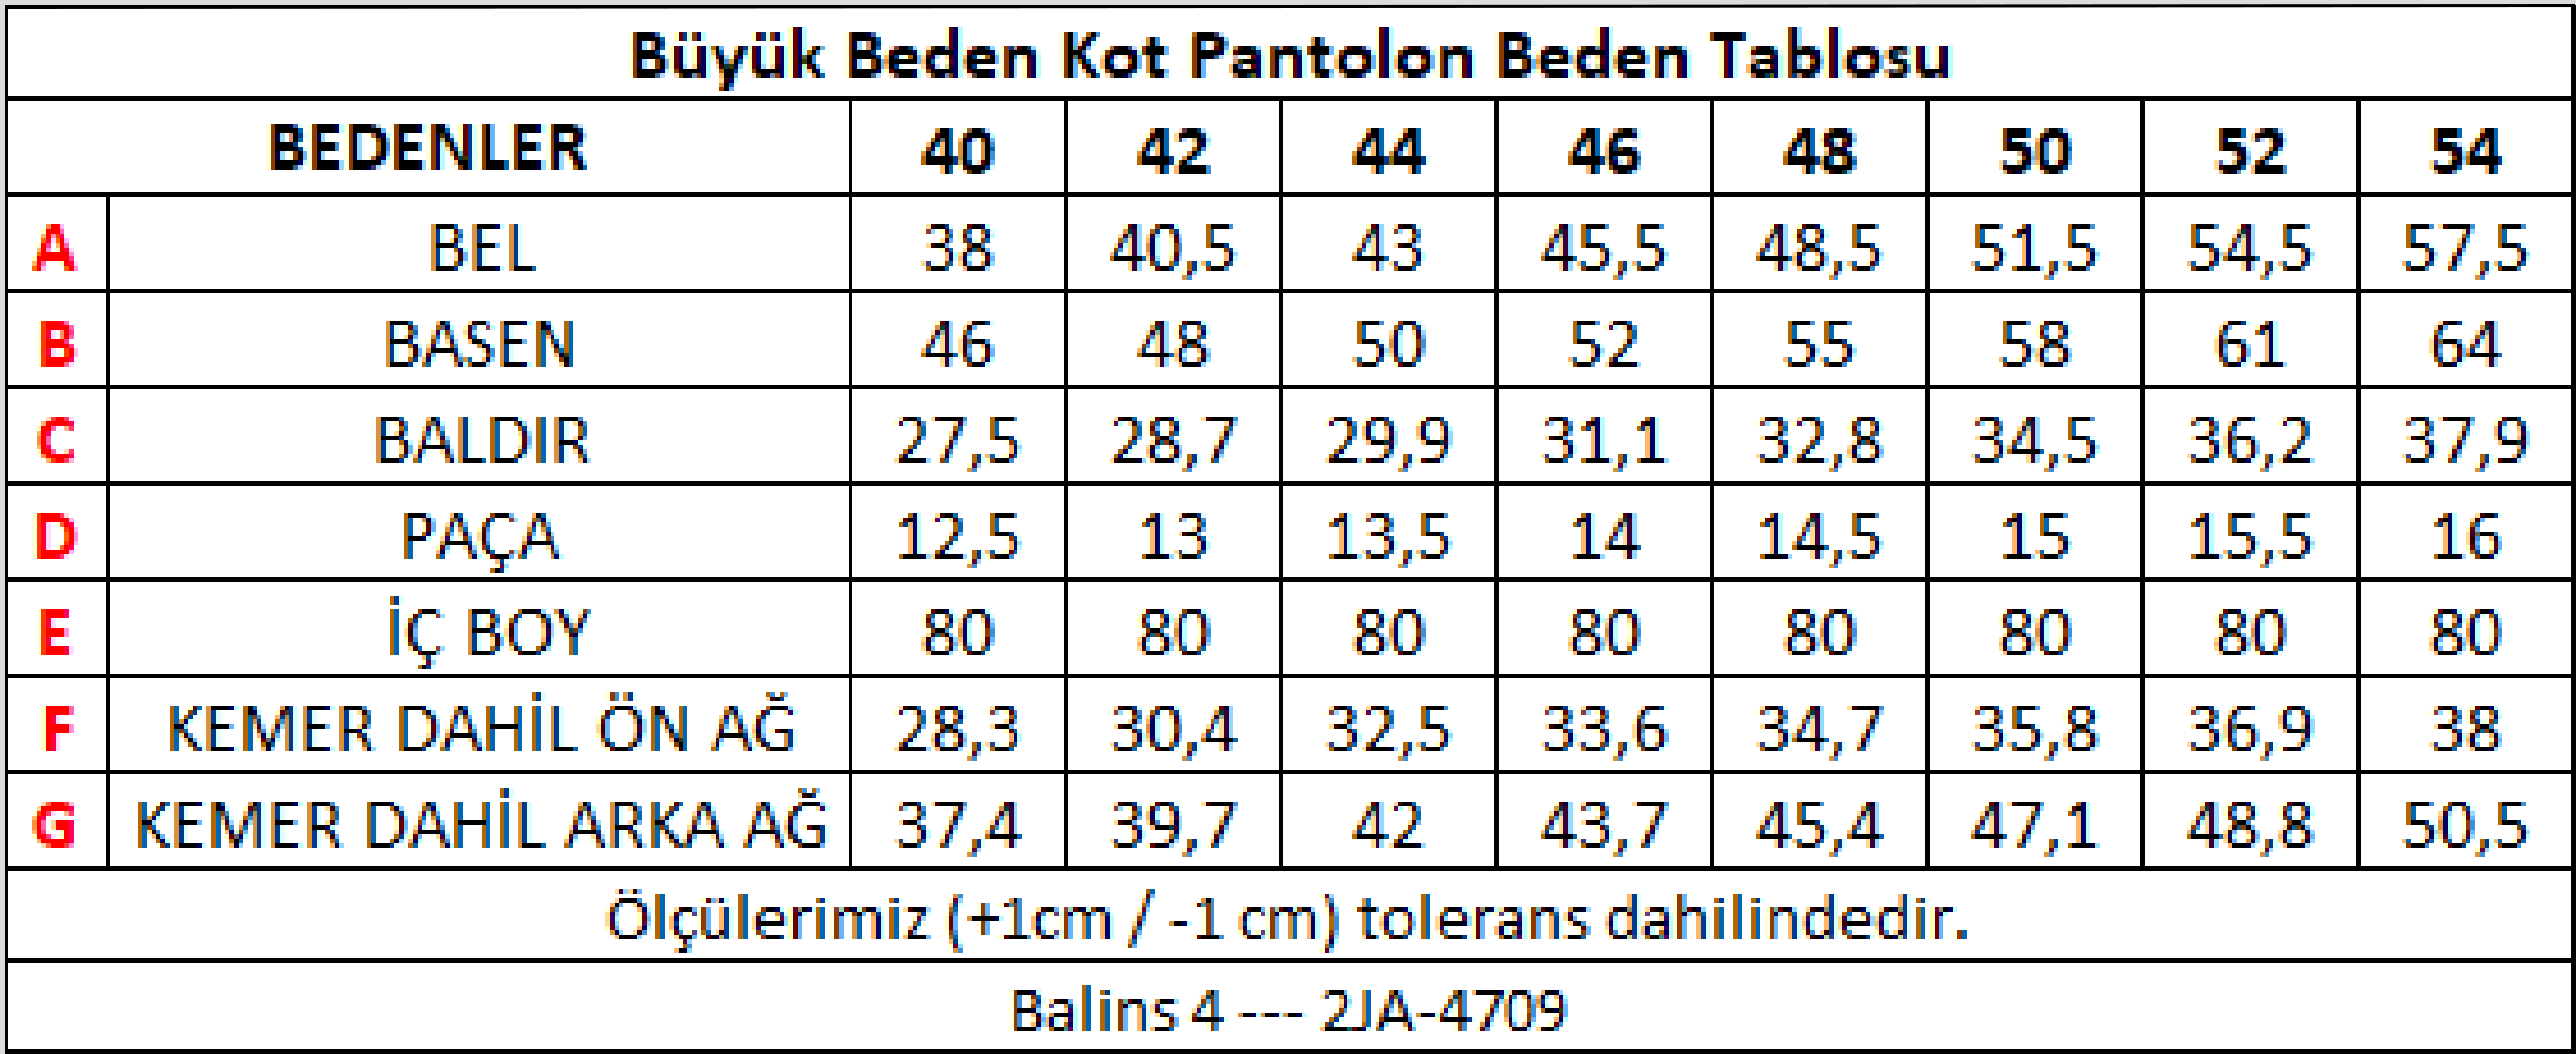 balins-4.png (51 KB)